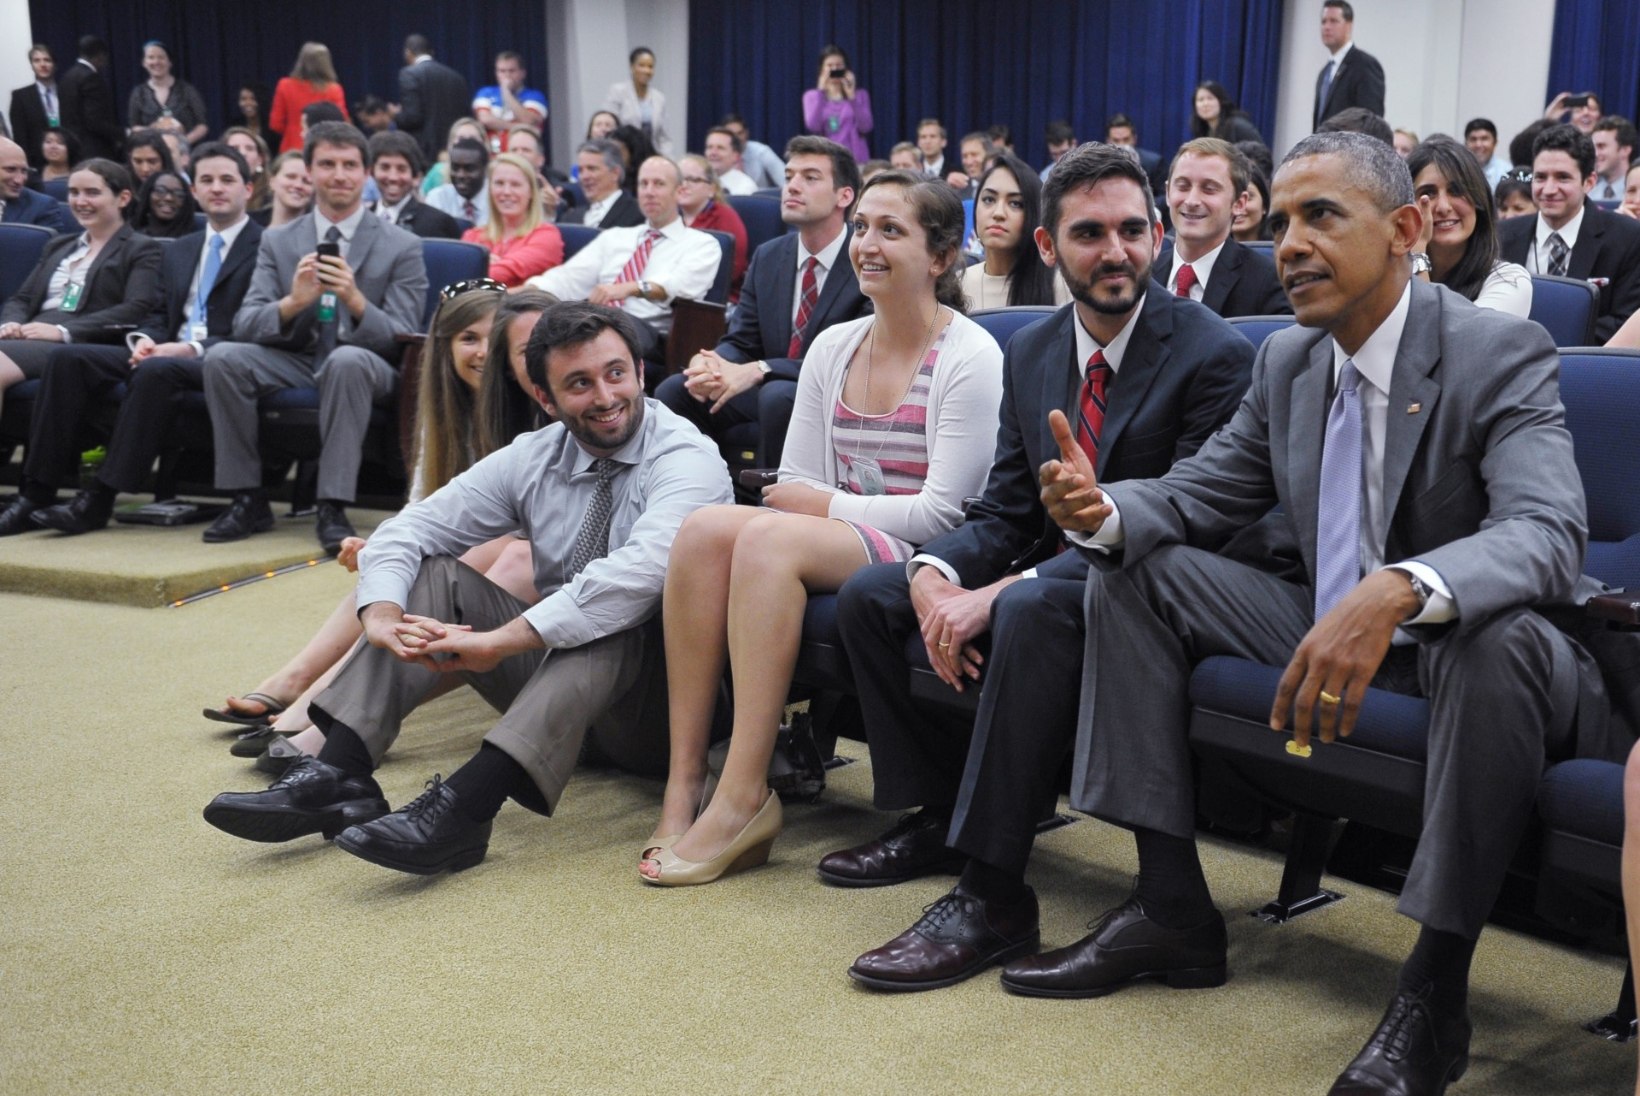 FOTOD: USA meeskonnale elas kaasa ka president Barack Obama